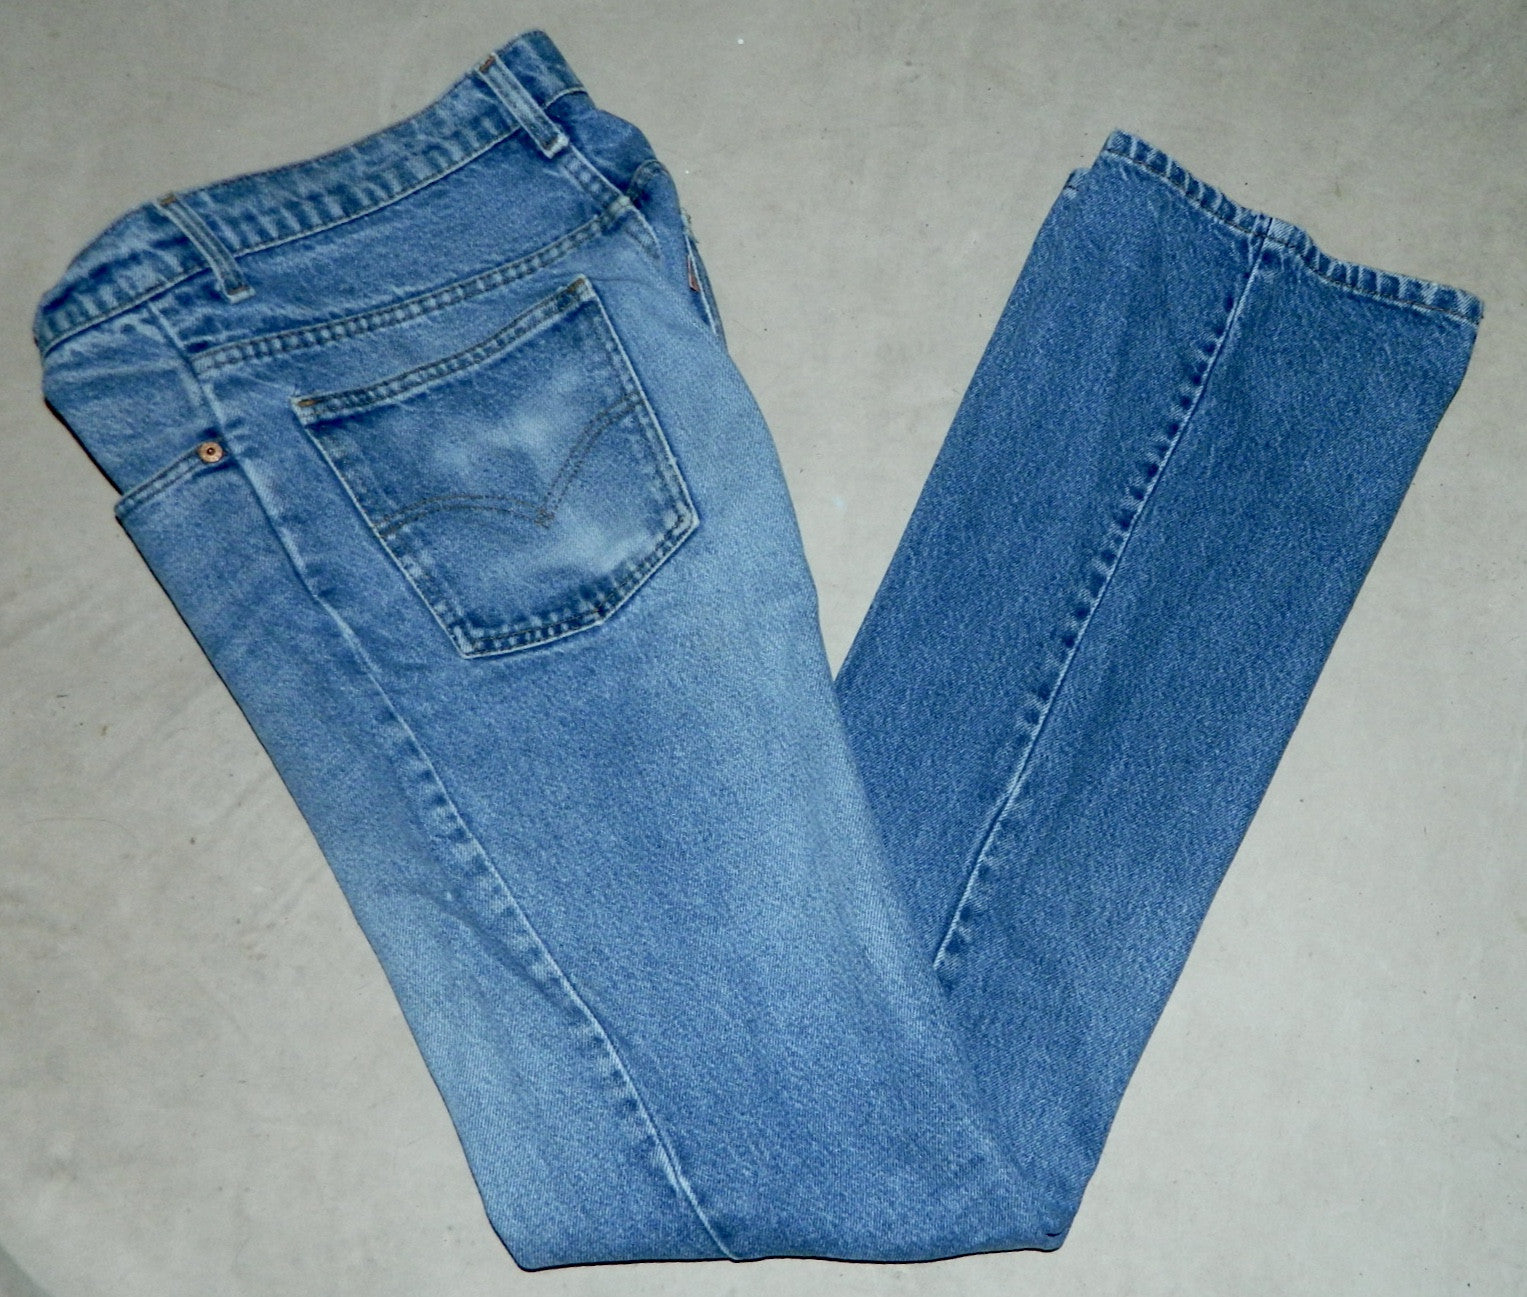 faded denim LEVI'S jeans 517 flare leg vintage 1980s boot cut jeans 31 x 36